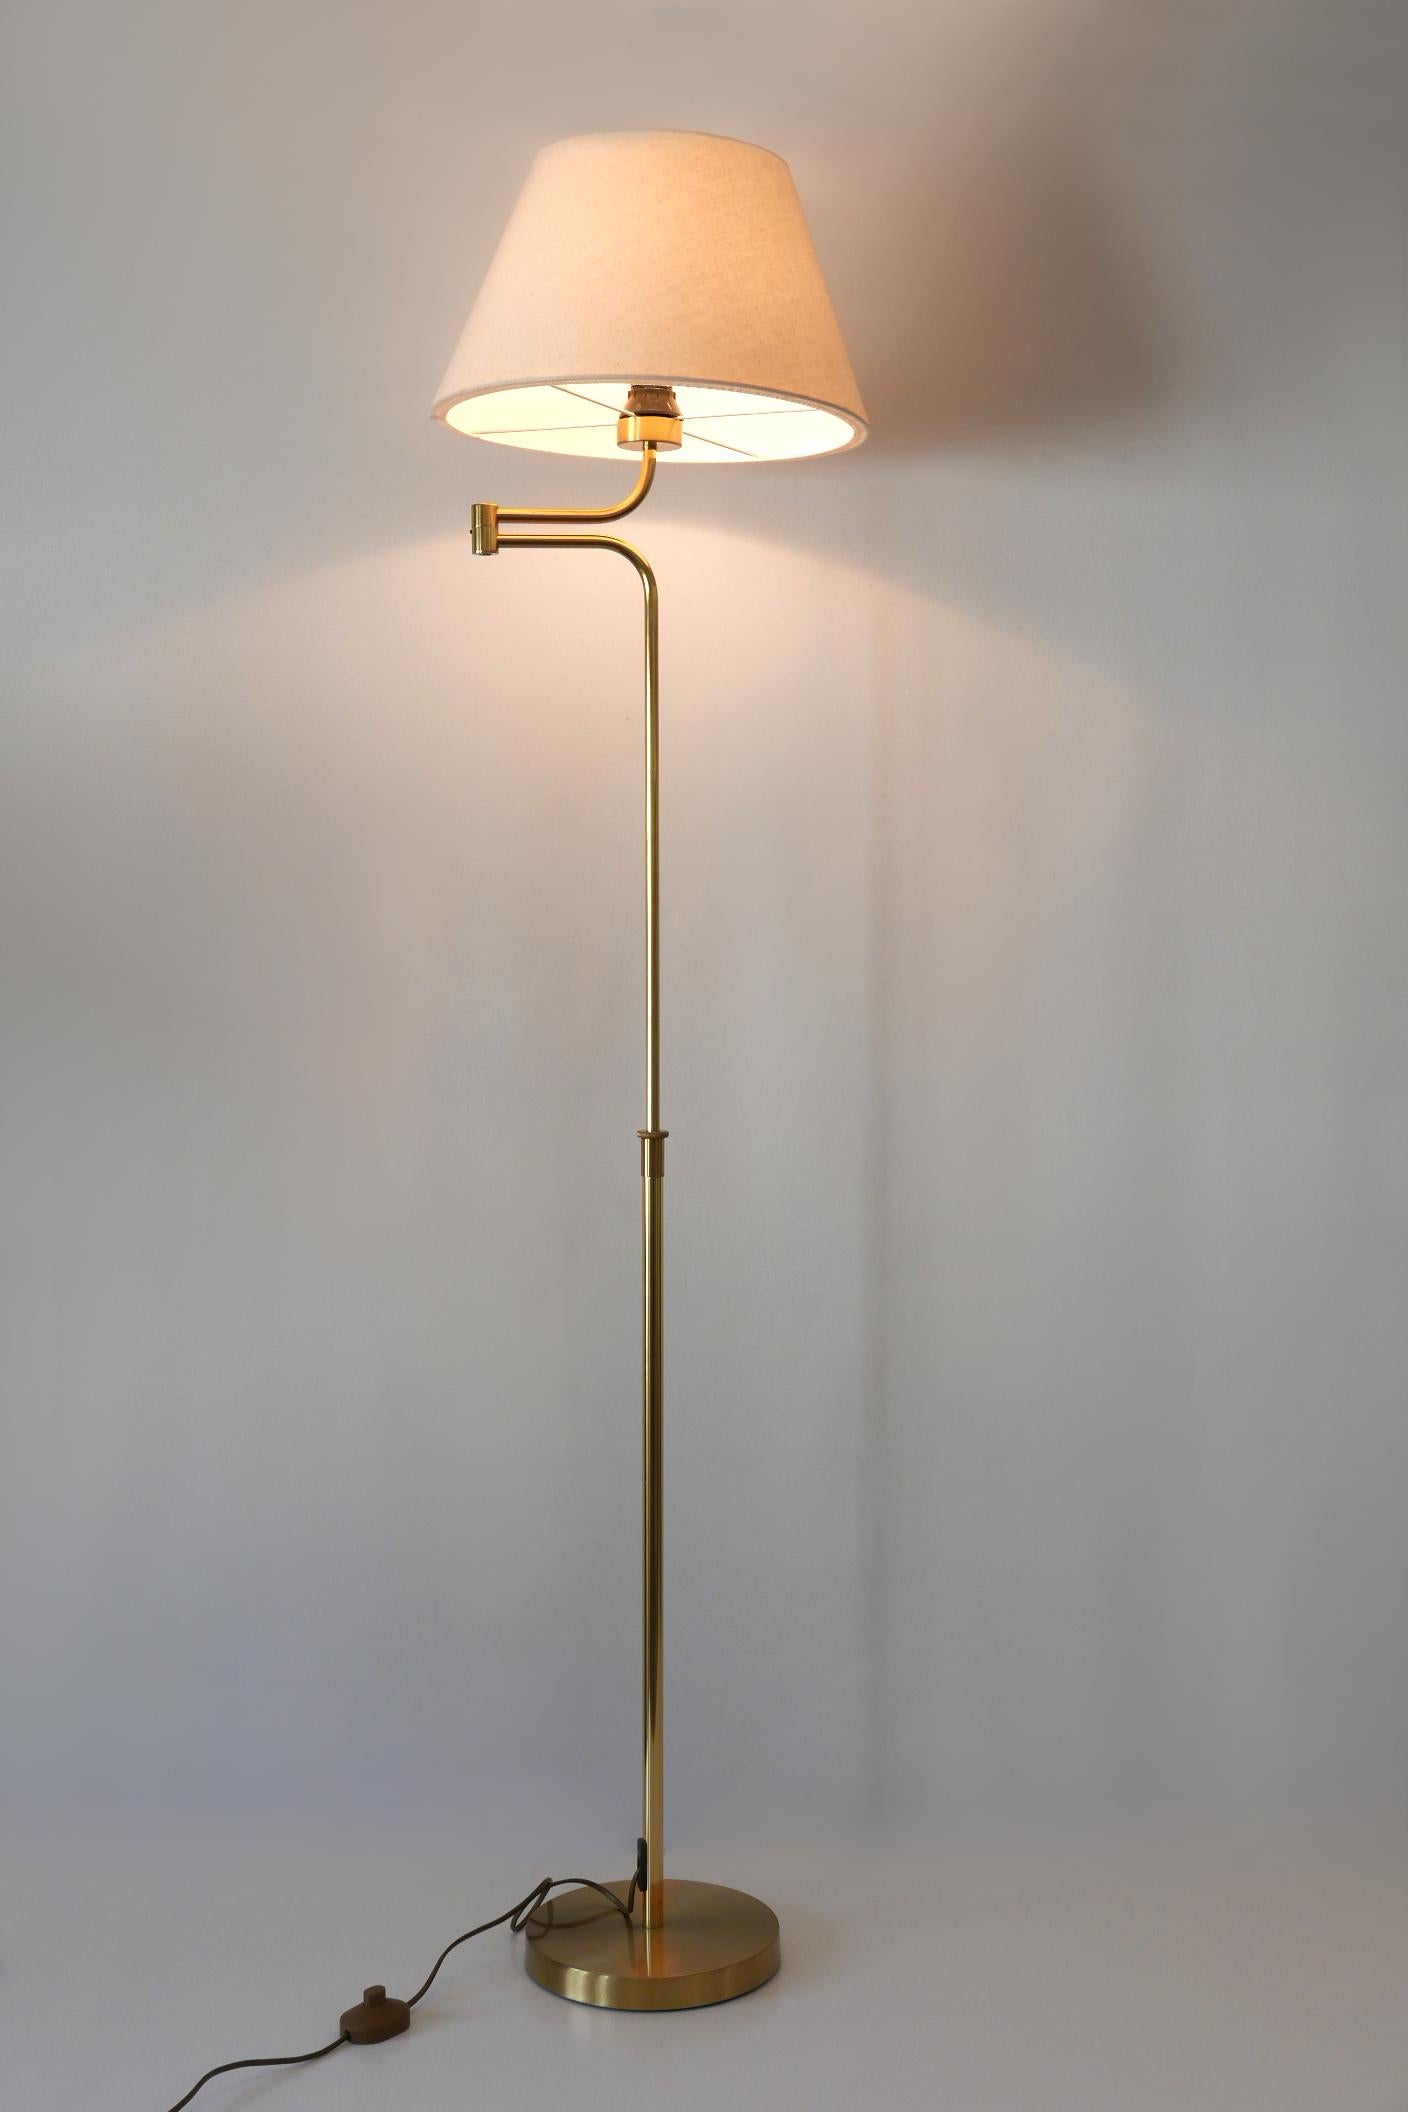 Mid-Century Modern Adjustable Vintage Floor Lamp or Reading Light by Sölken Leuchten Germany 1980s For Sale